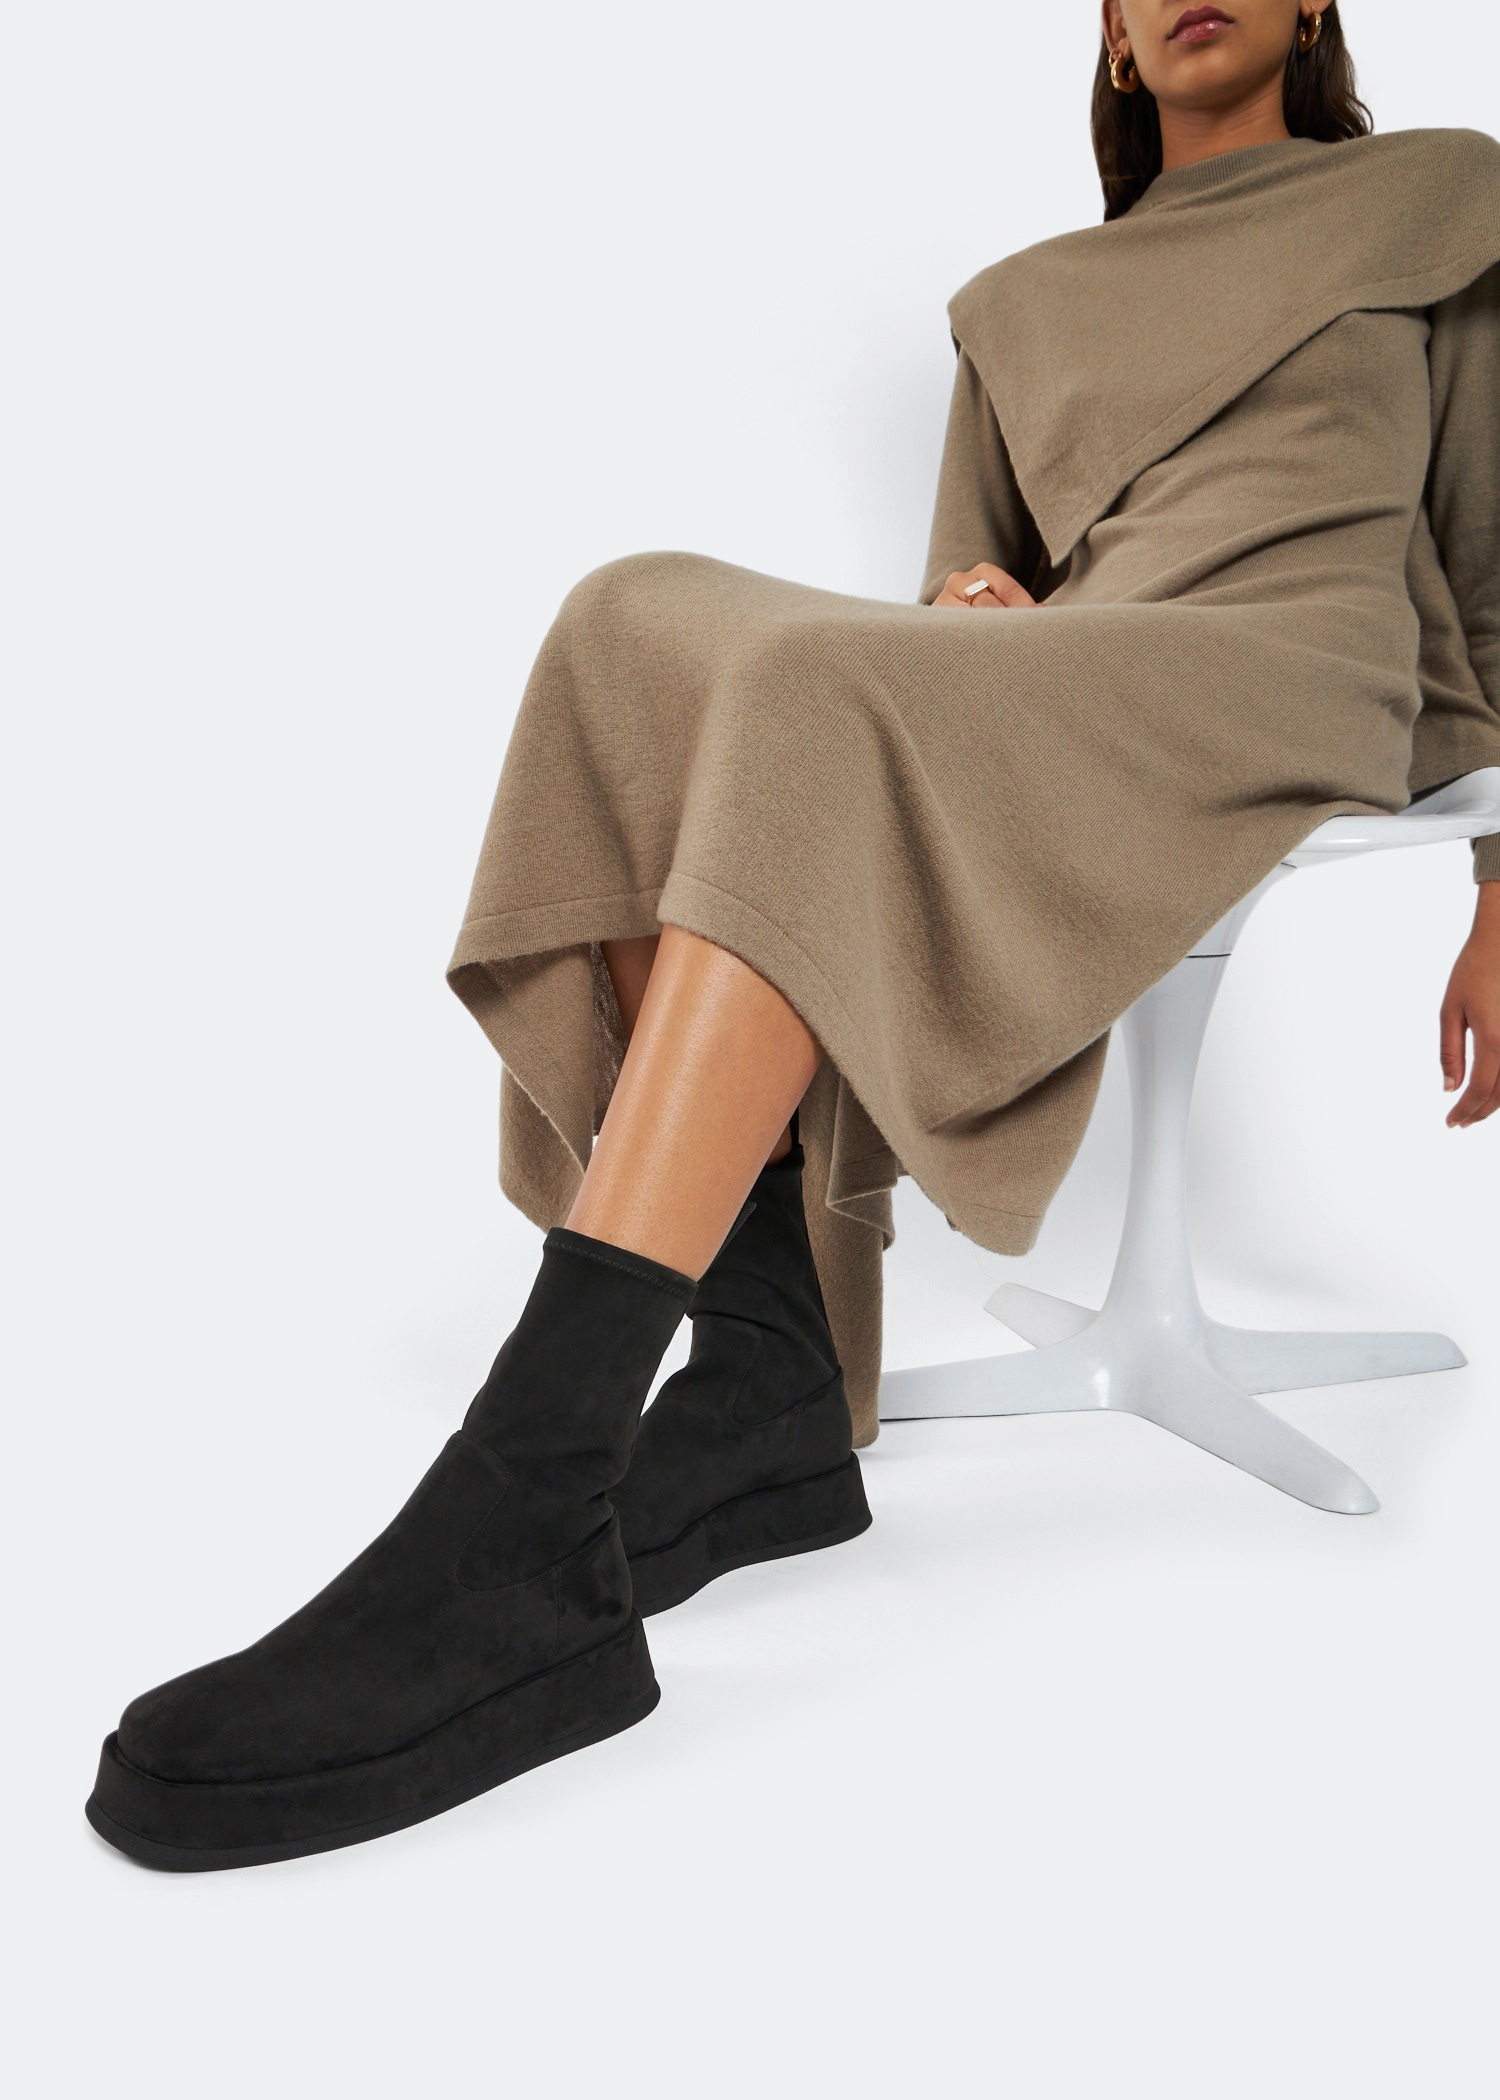 Gia Borghini x RHW Rosie 11 boots for Women - Black in KSA | Level